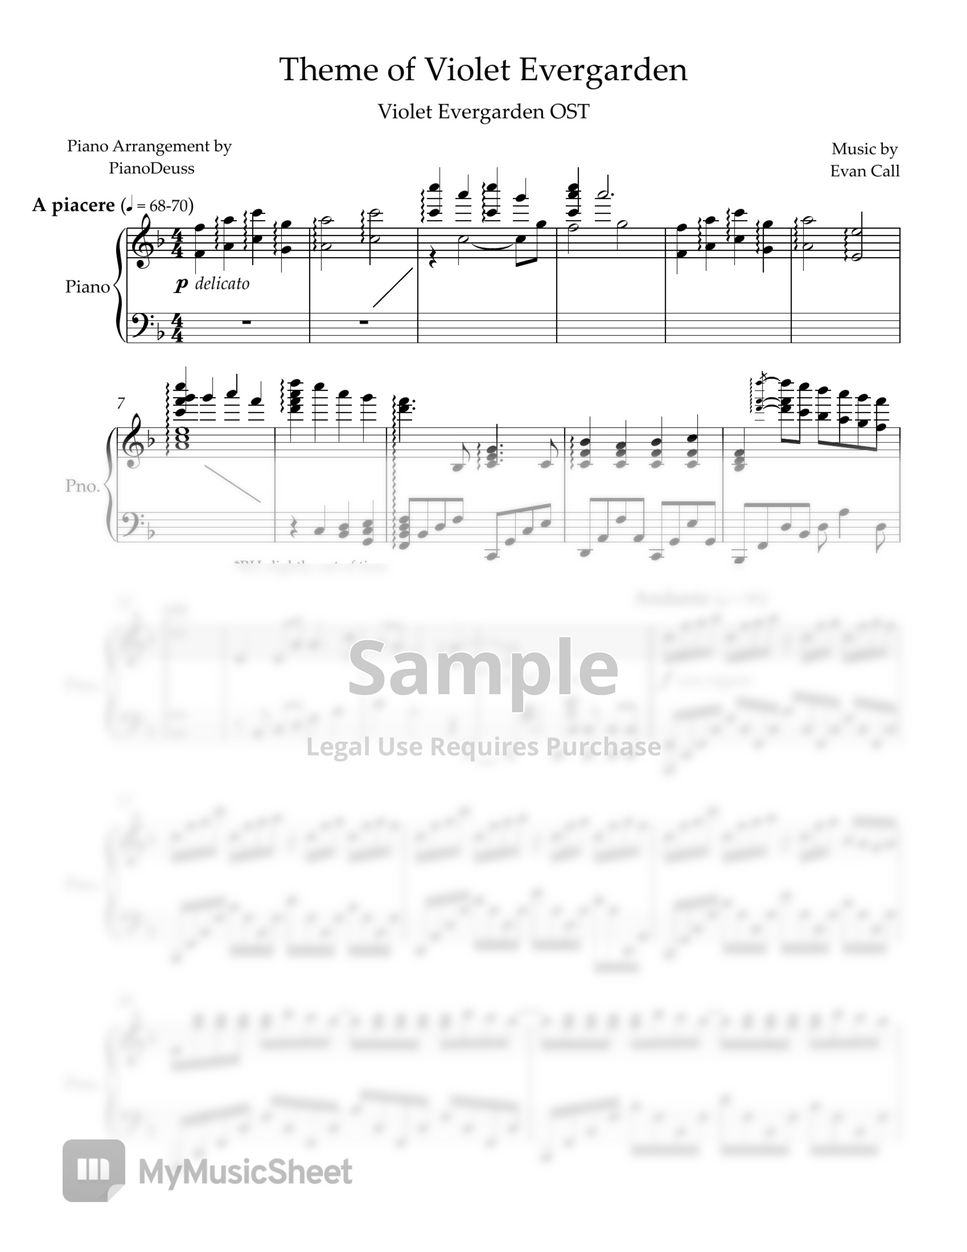 Violet Evergarden OST - Theme of Violet Evergarden by PianoDeuss